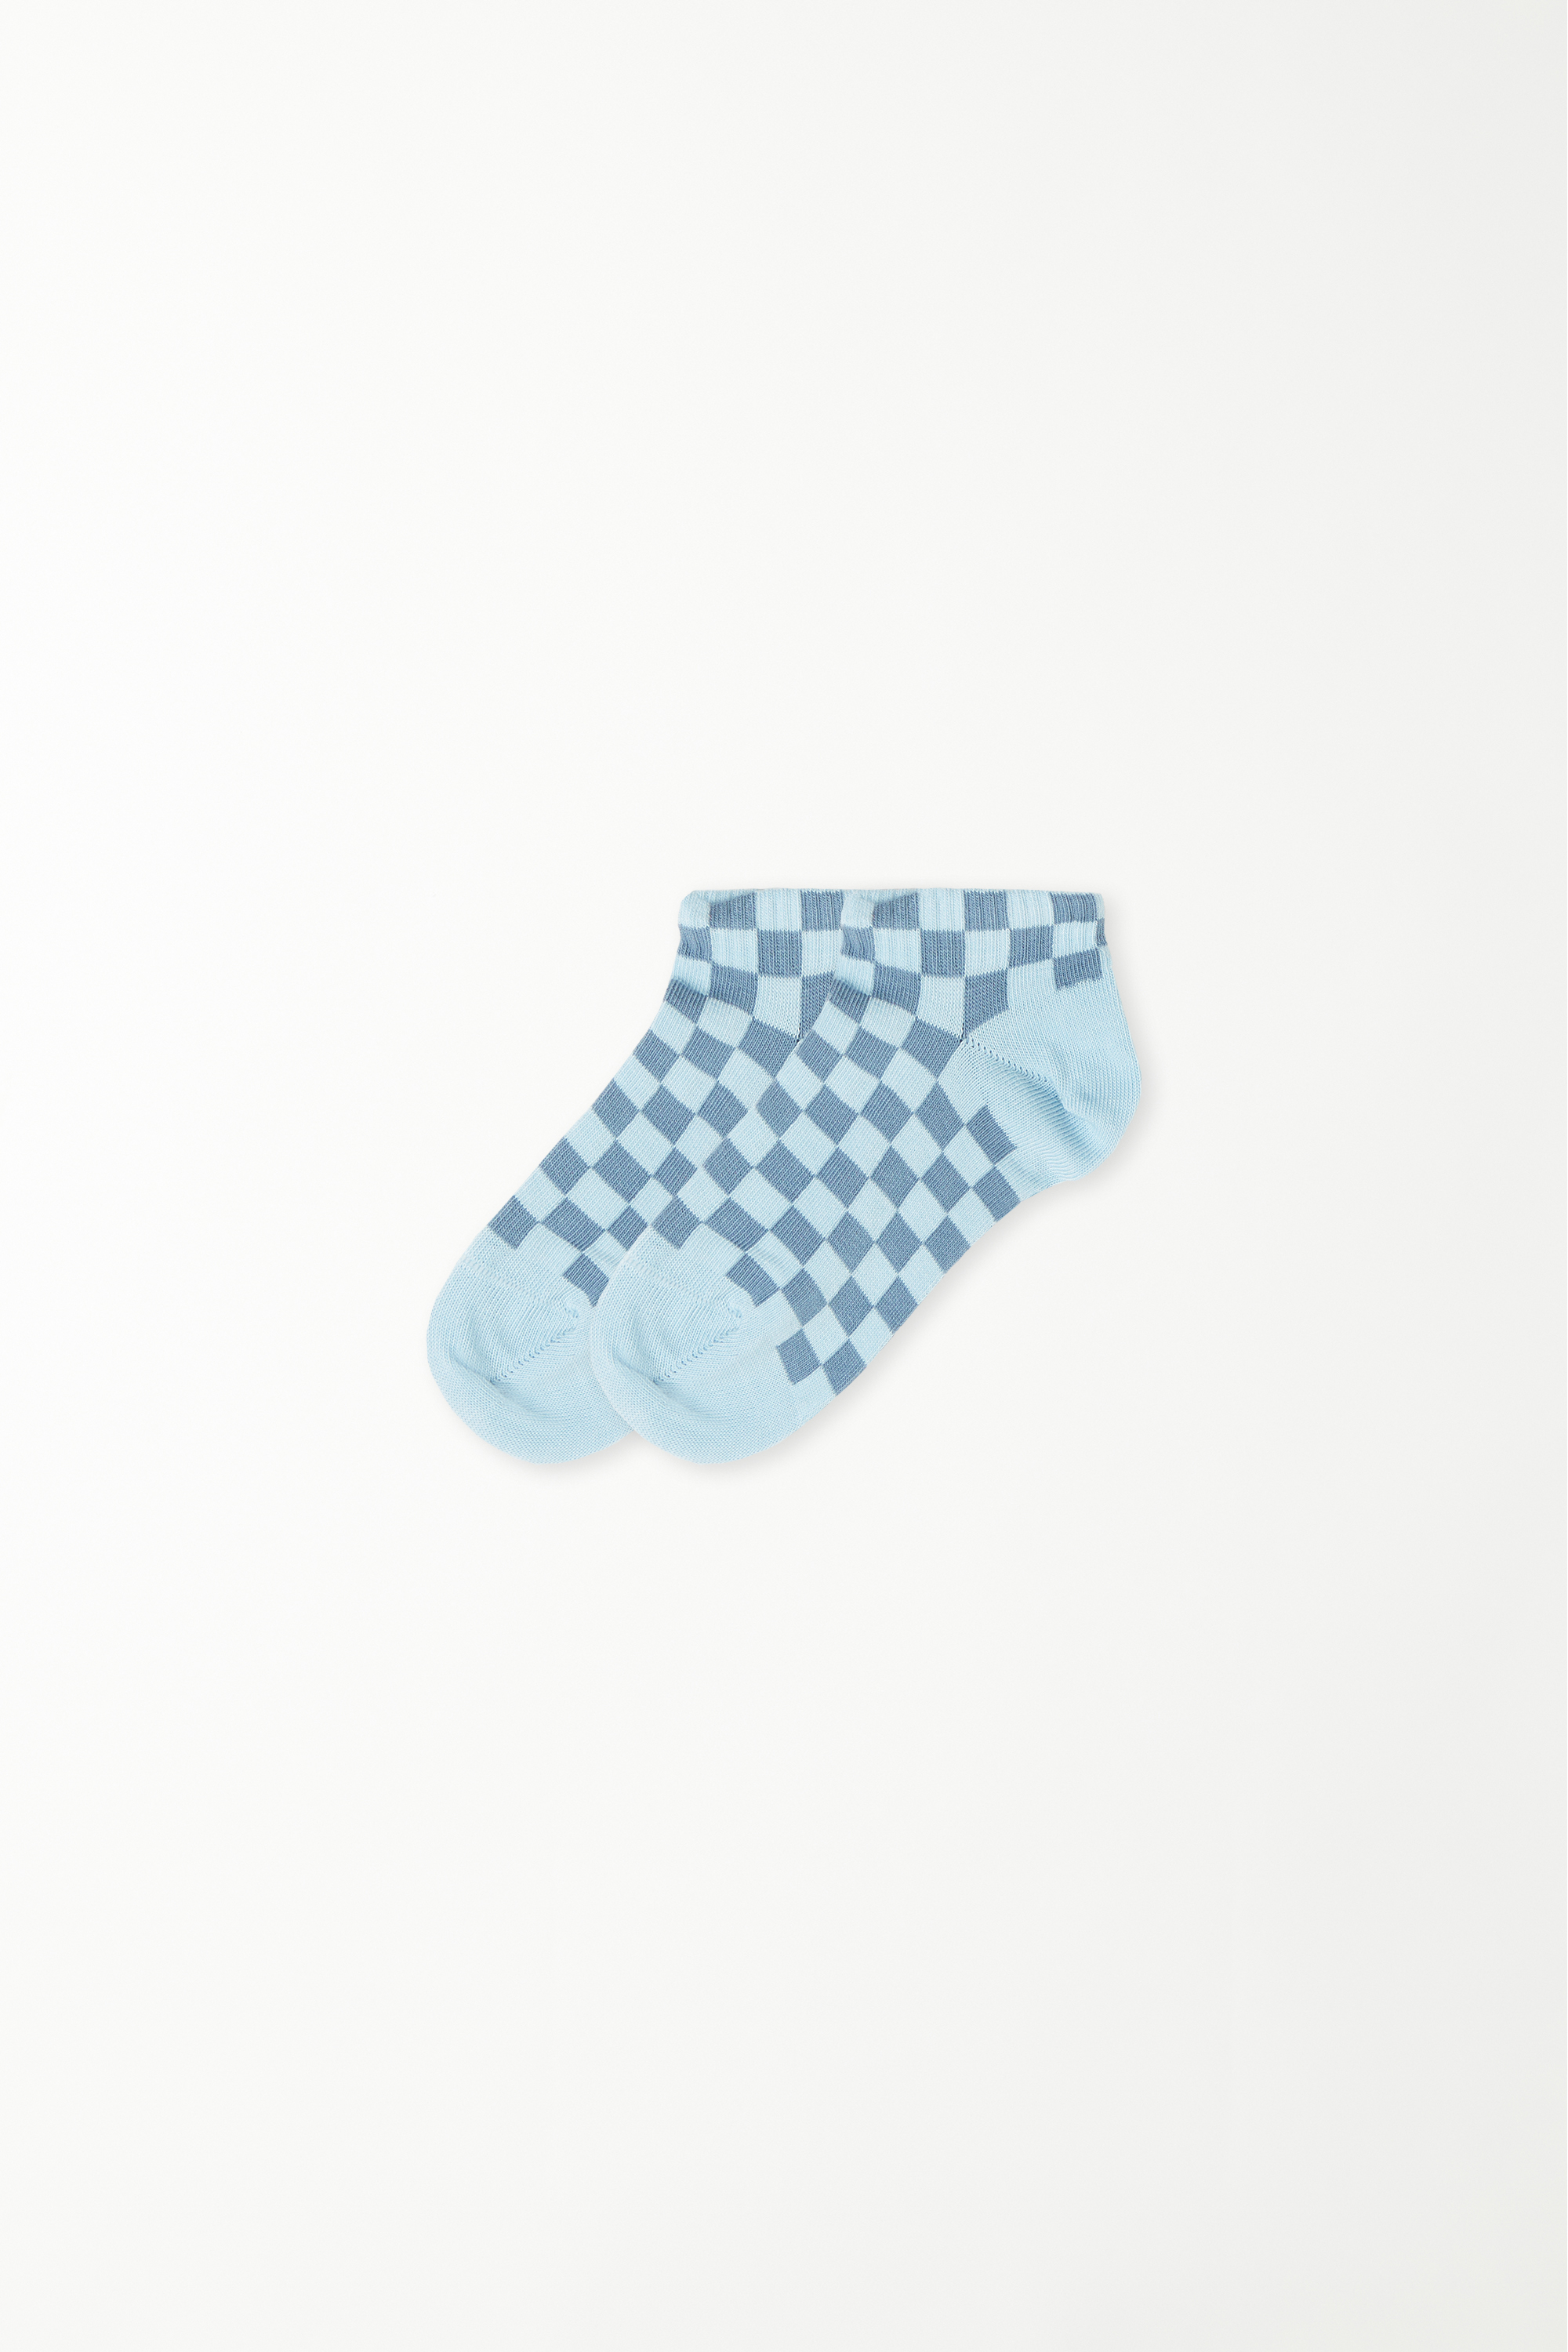 Boys’ Patterned Cotton Trainer Socks